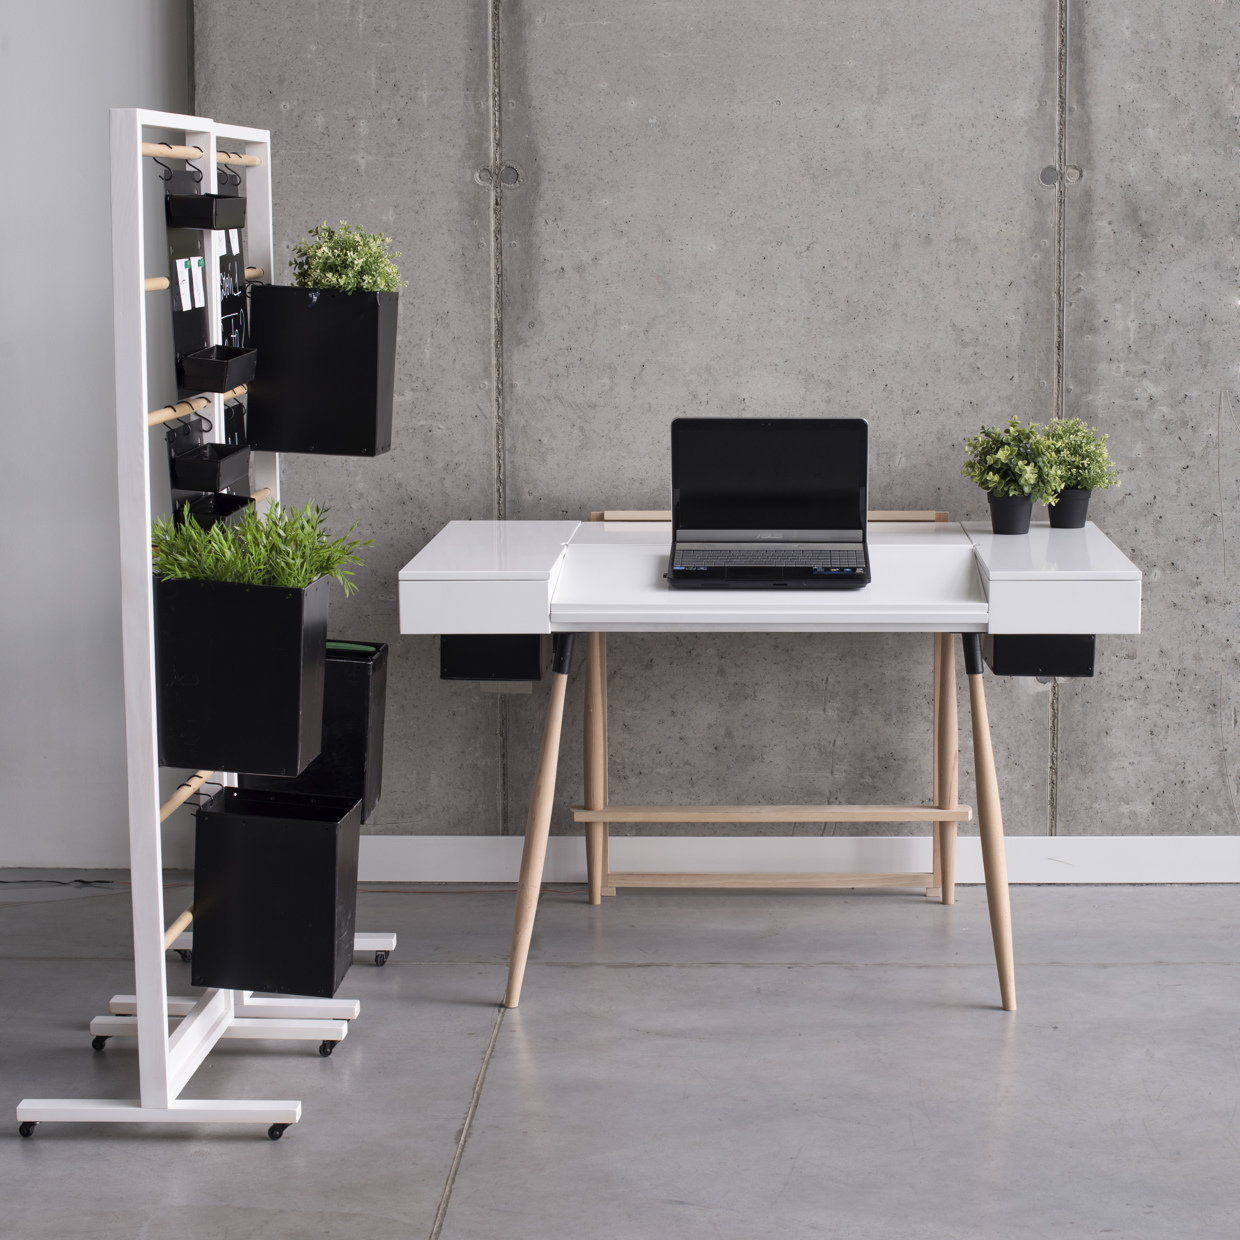 Desk Concept / Agnieszka Graczykowska (6)